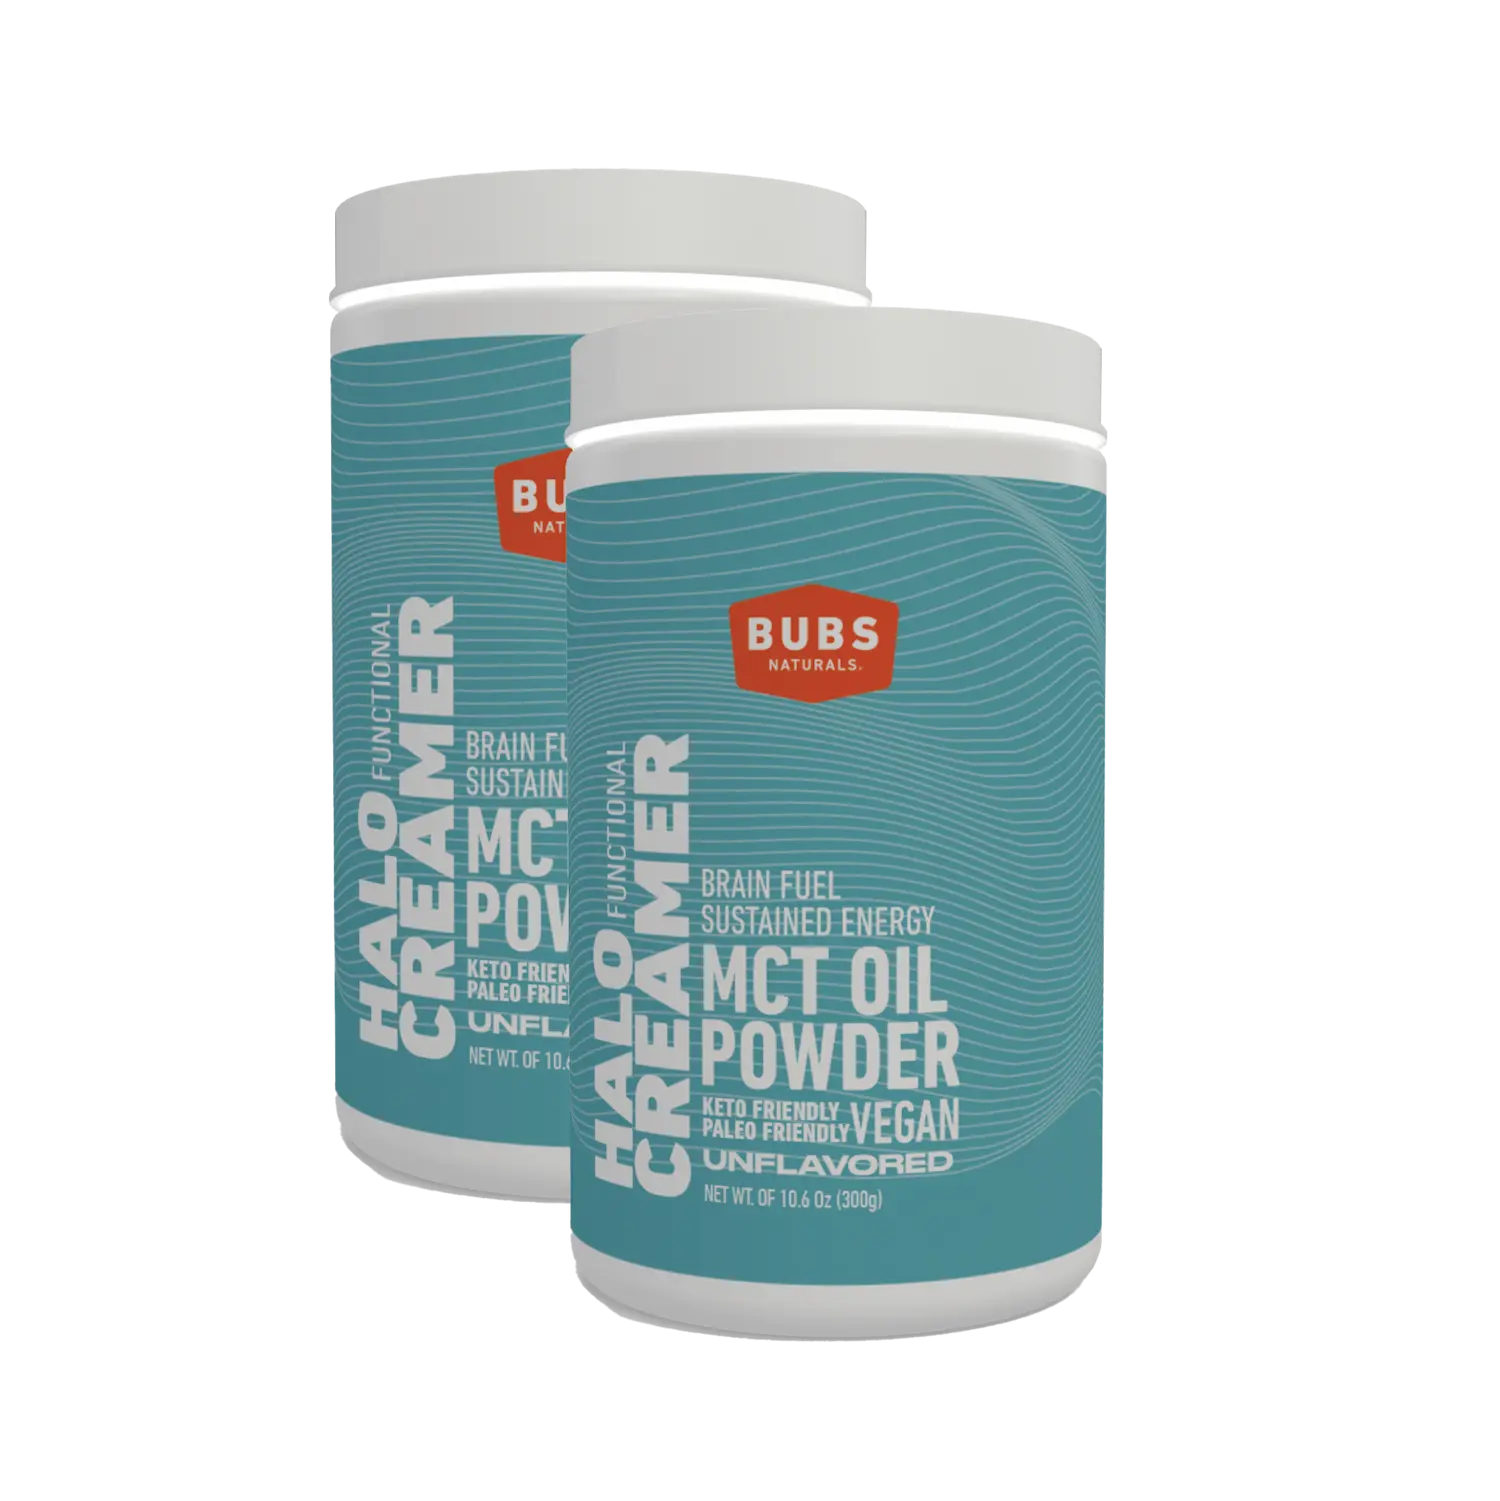 BUBS Naturals MCT Oil Powder, Vegan Halo Functional Creamer, 10oz tub, bundle of 2